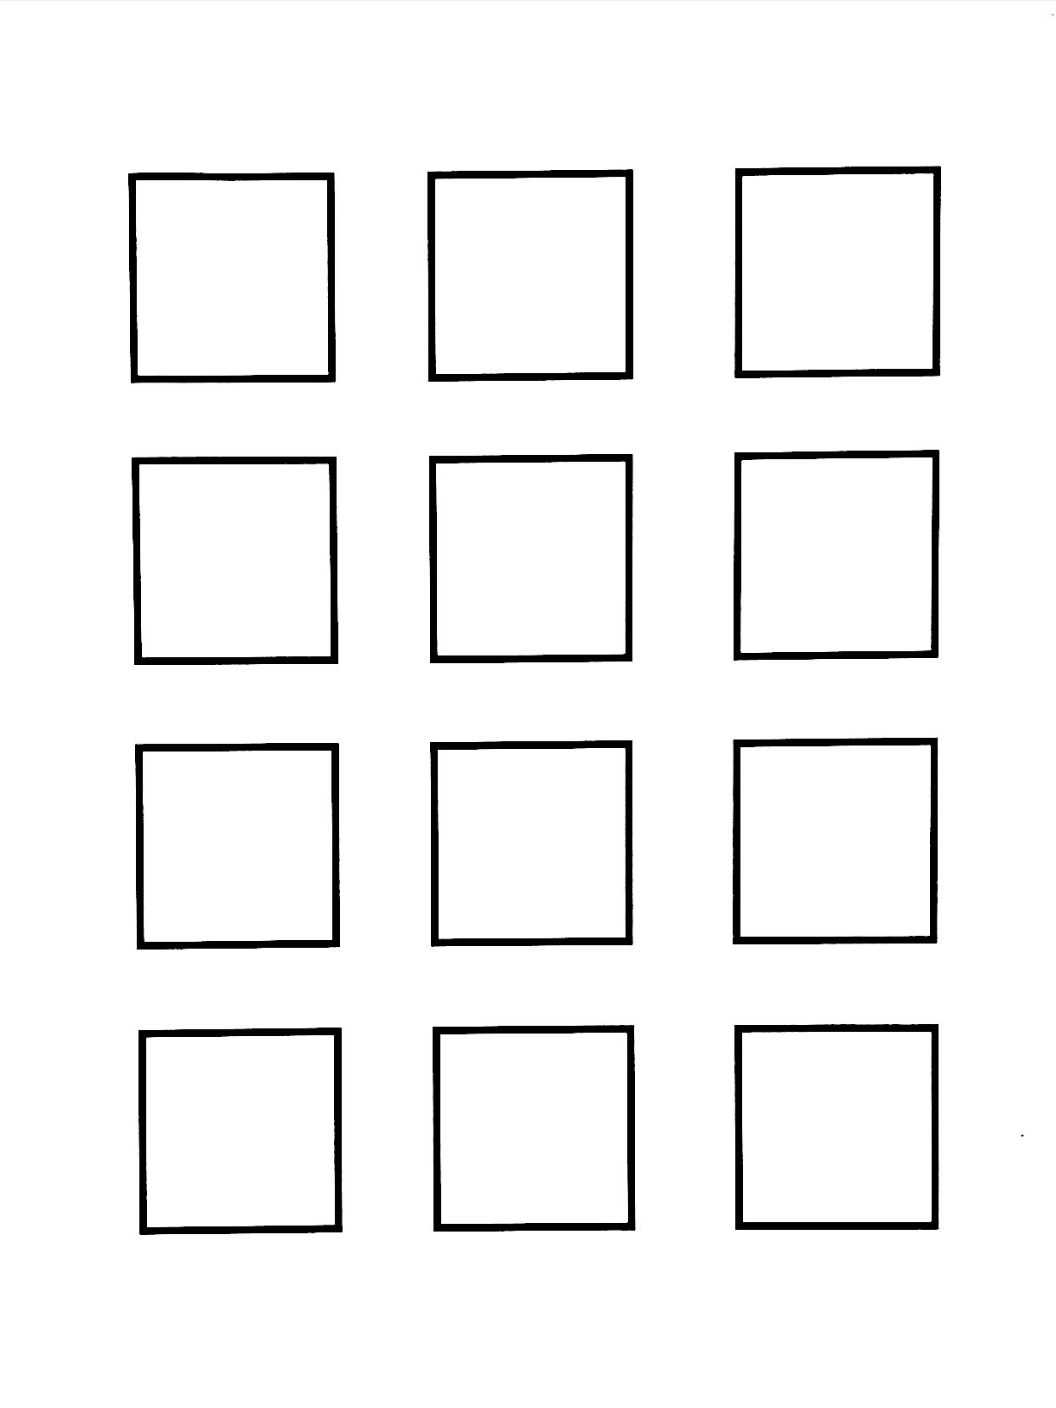 Empty Pattern Practice Sheet.png